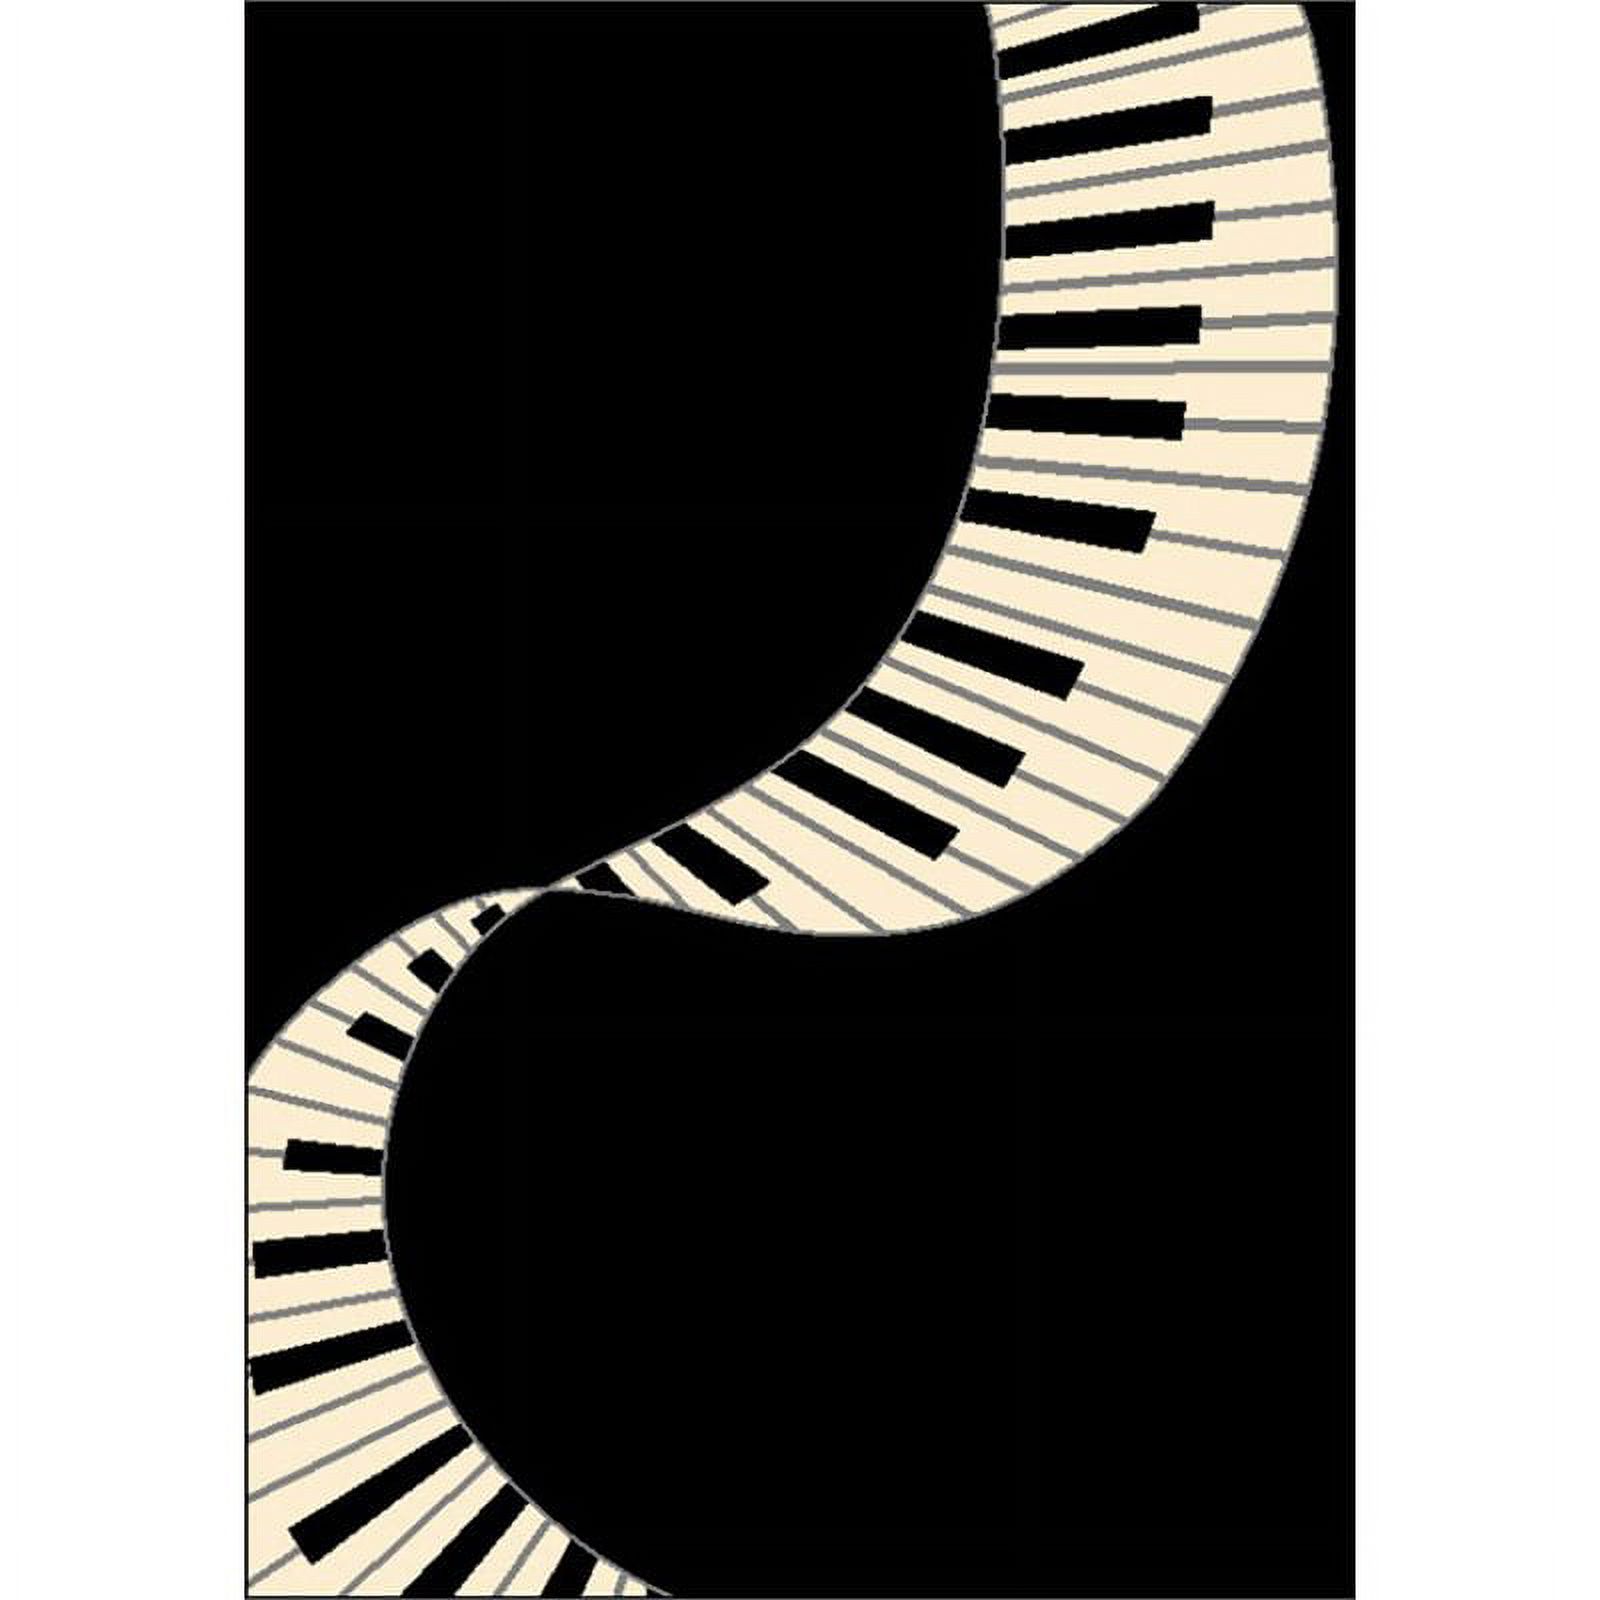 Terra Piano Rectangle Area Rug Black/White - image 1 of 1